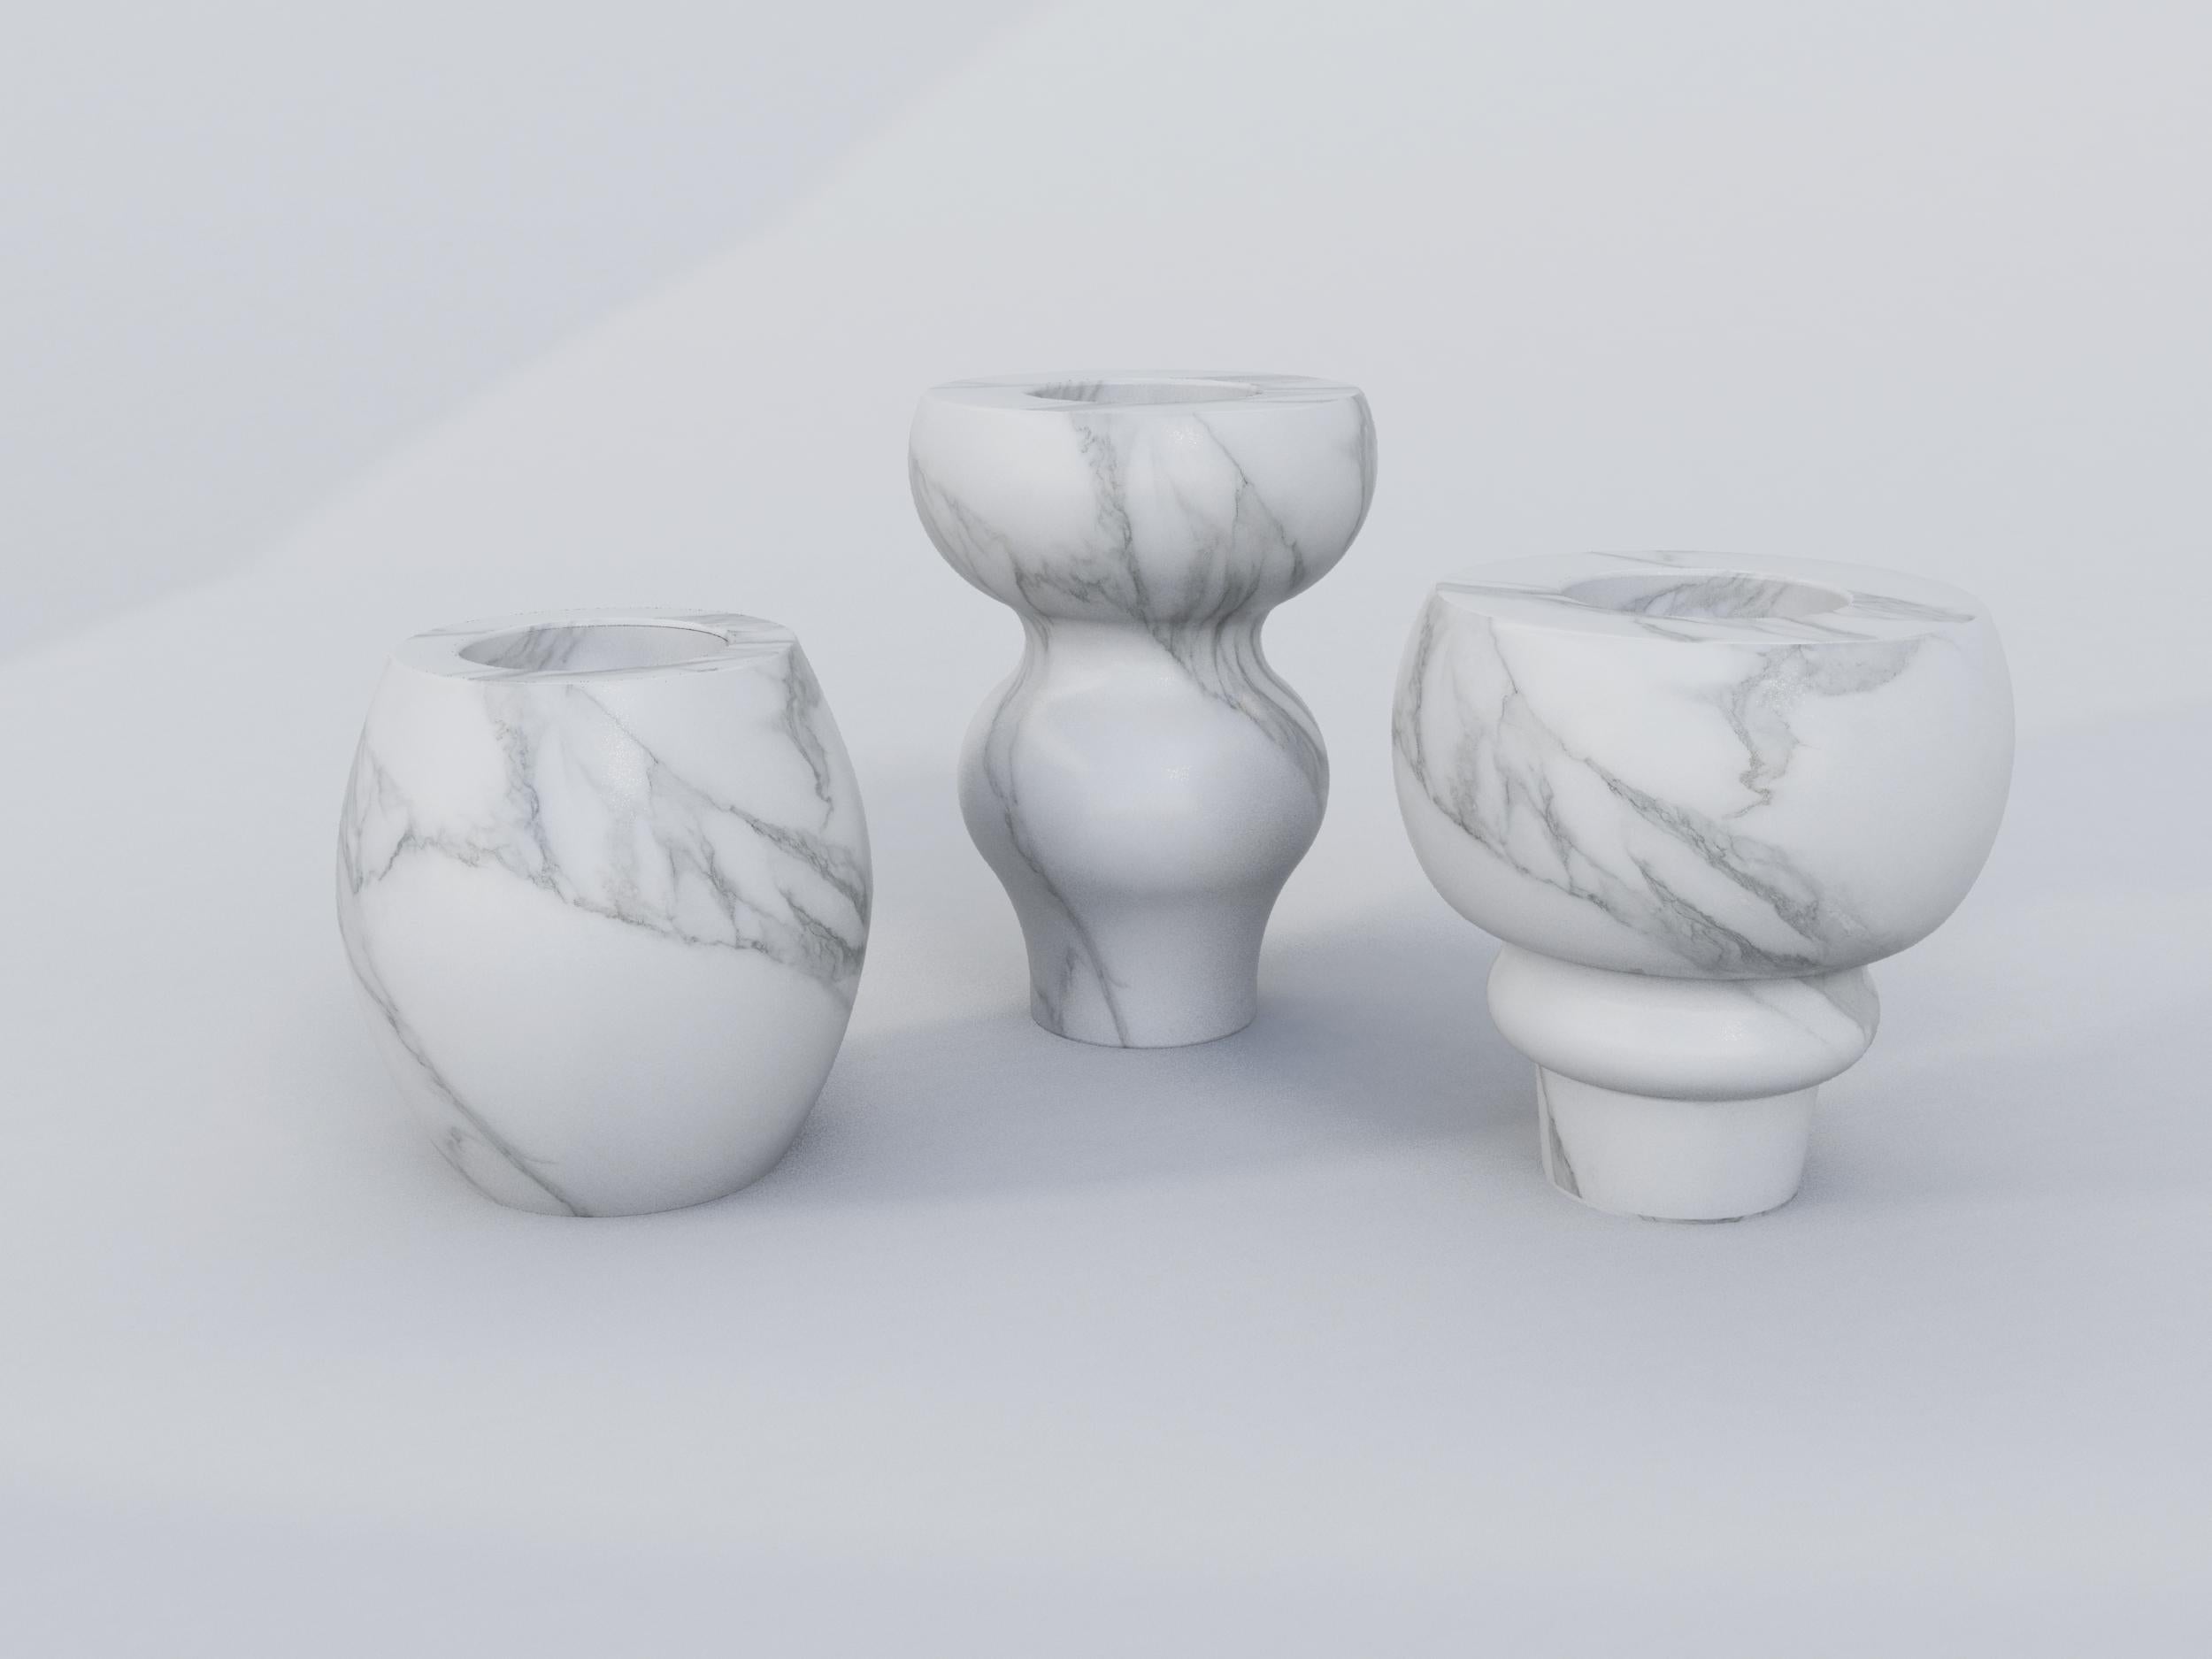 Marble Egg Cup designed by Feix & Merlin.

Size: Diameter cm 9 x 7 height
Materials: White Carrara
Designed by: Feix & Merlin.